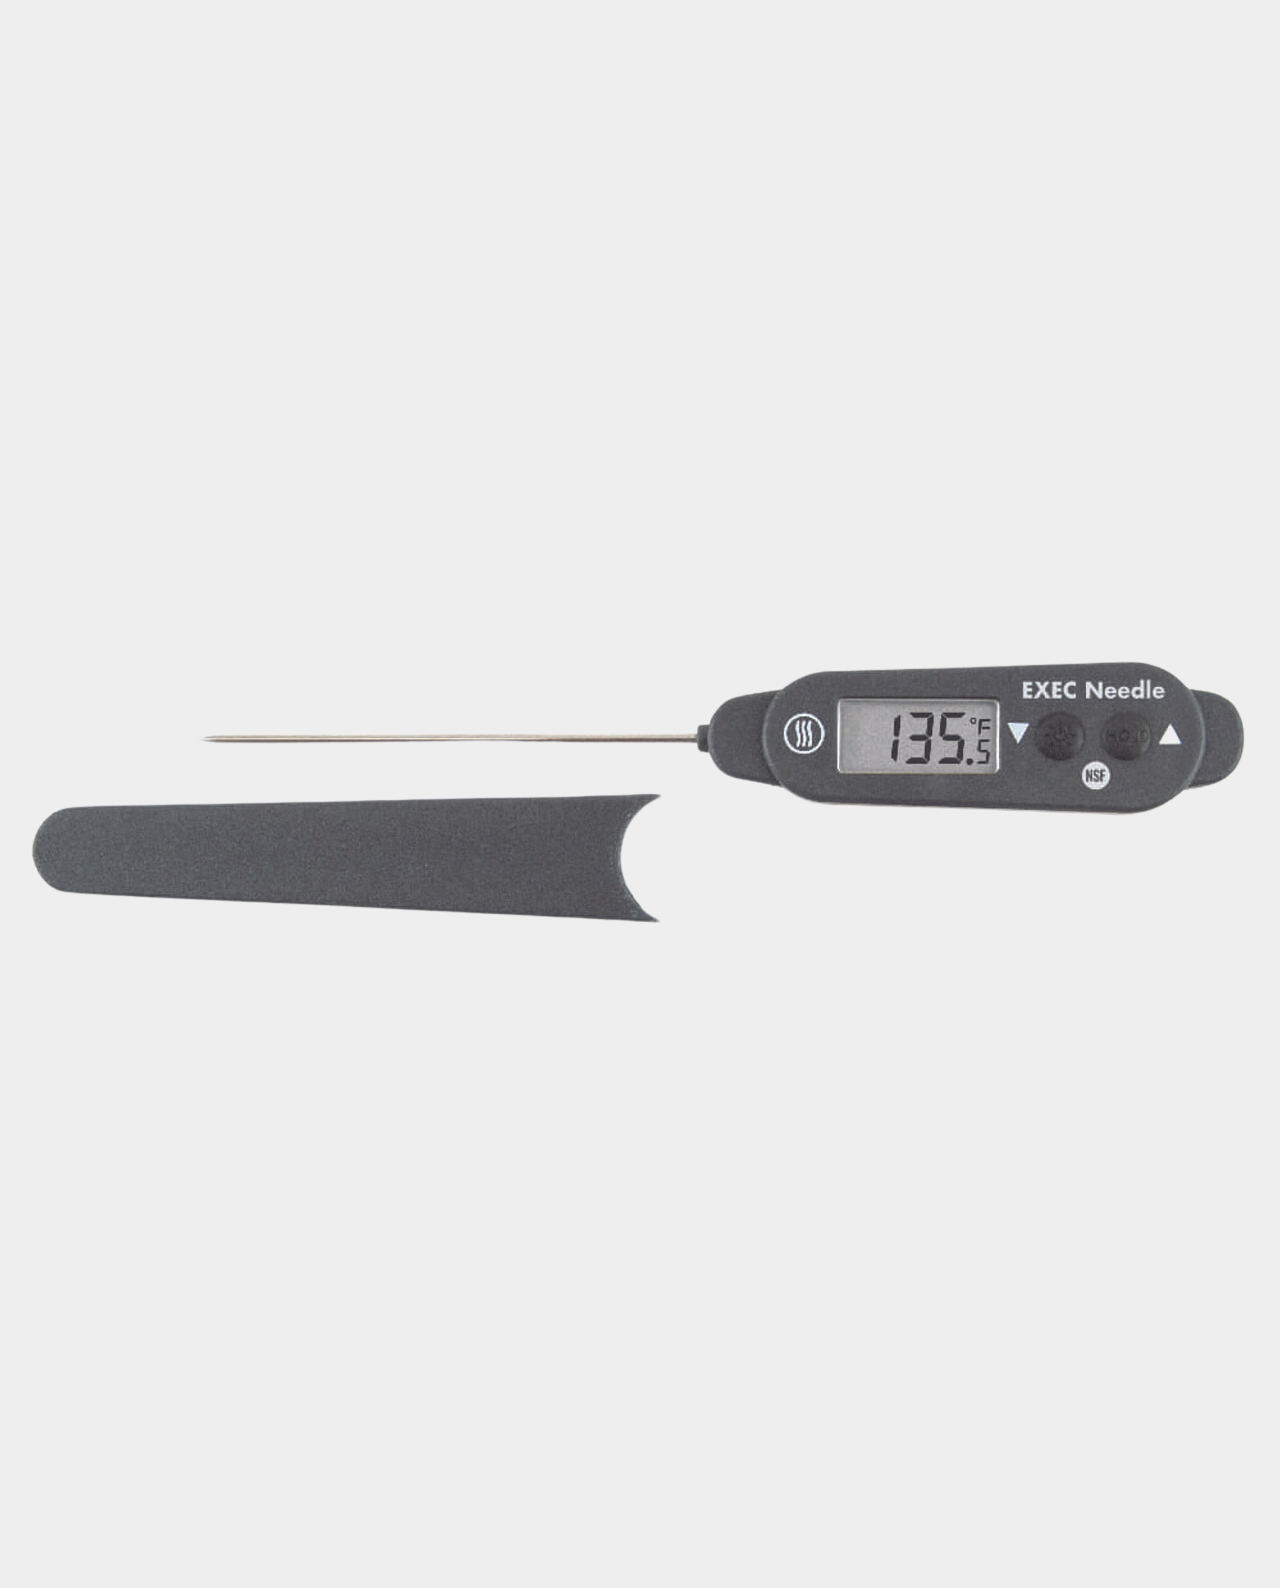 ChefAlarm Oven Thermometer – Breadtopia